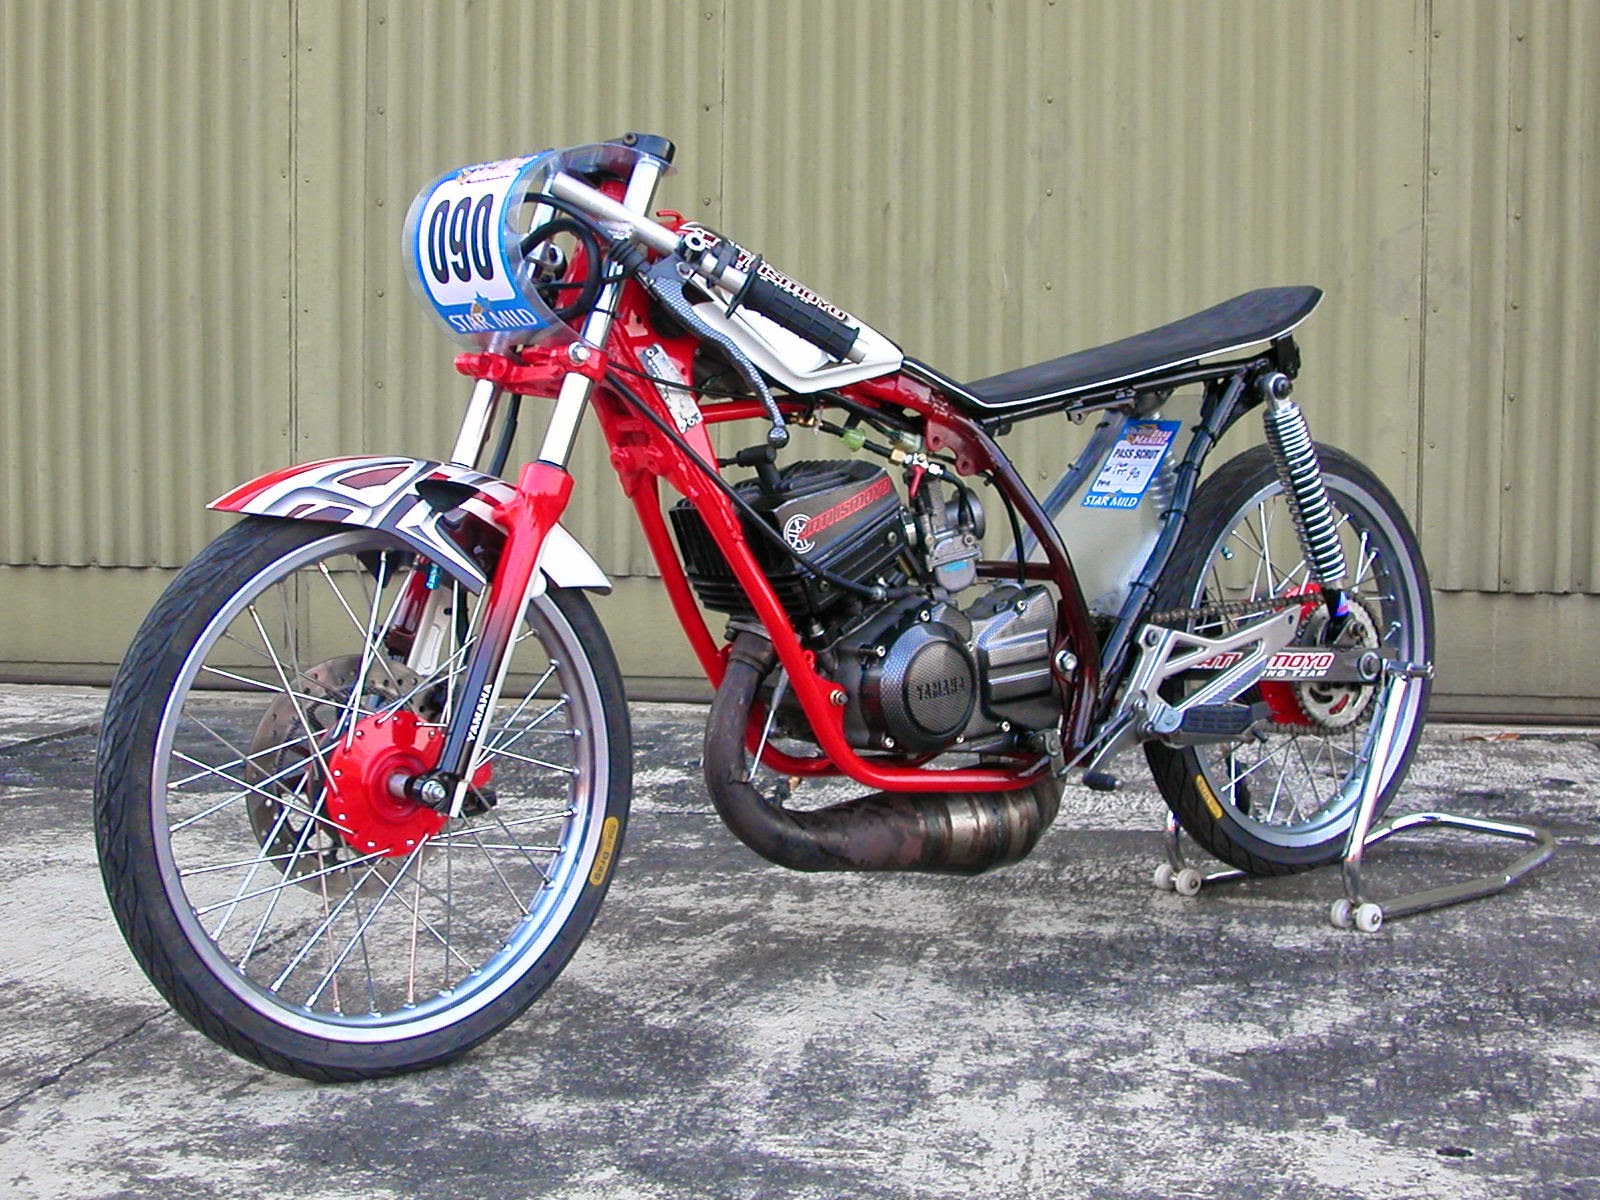 Modification Yamaha Rx King Drag - Modification Motorcycle ...